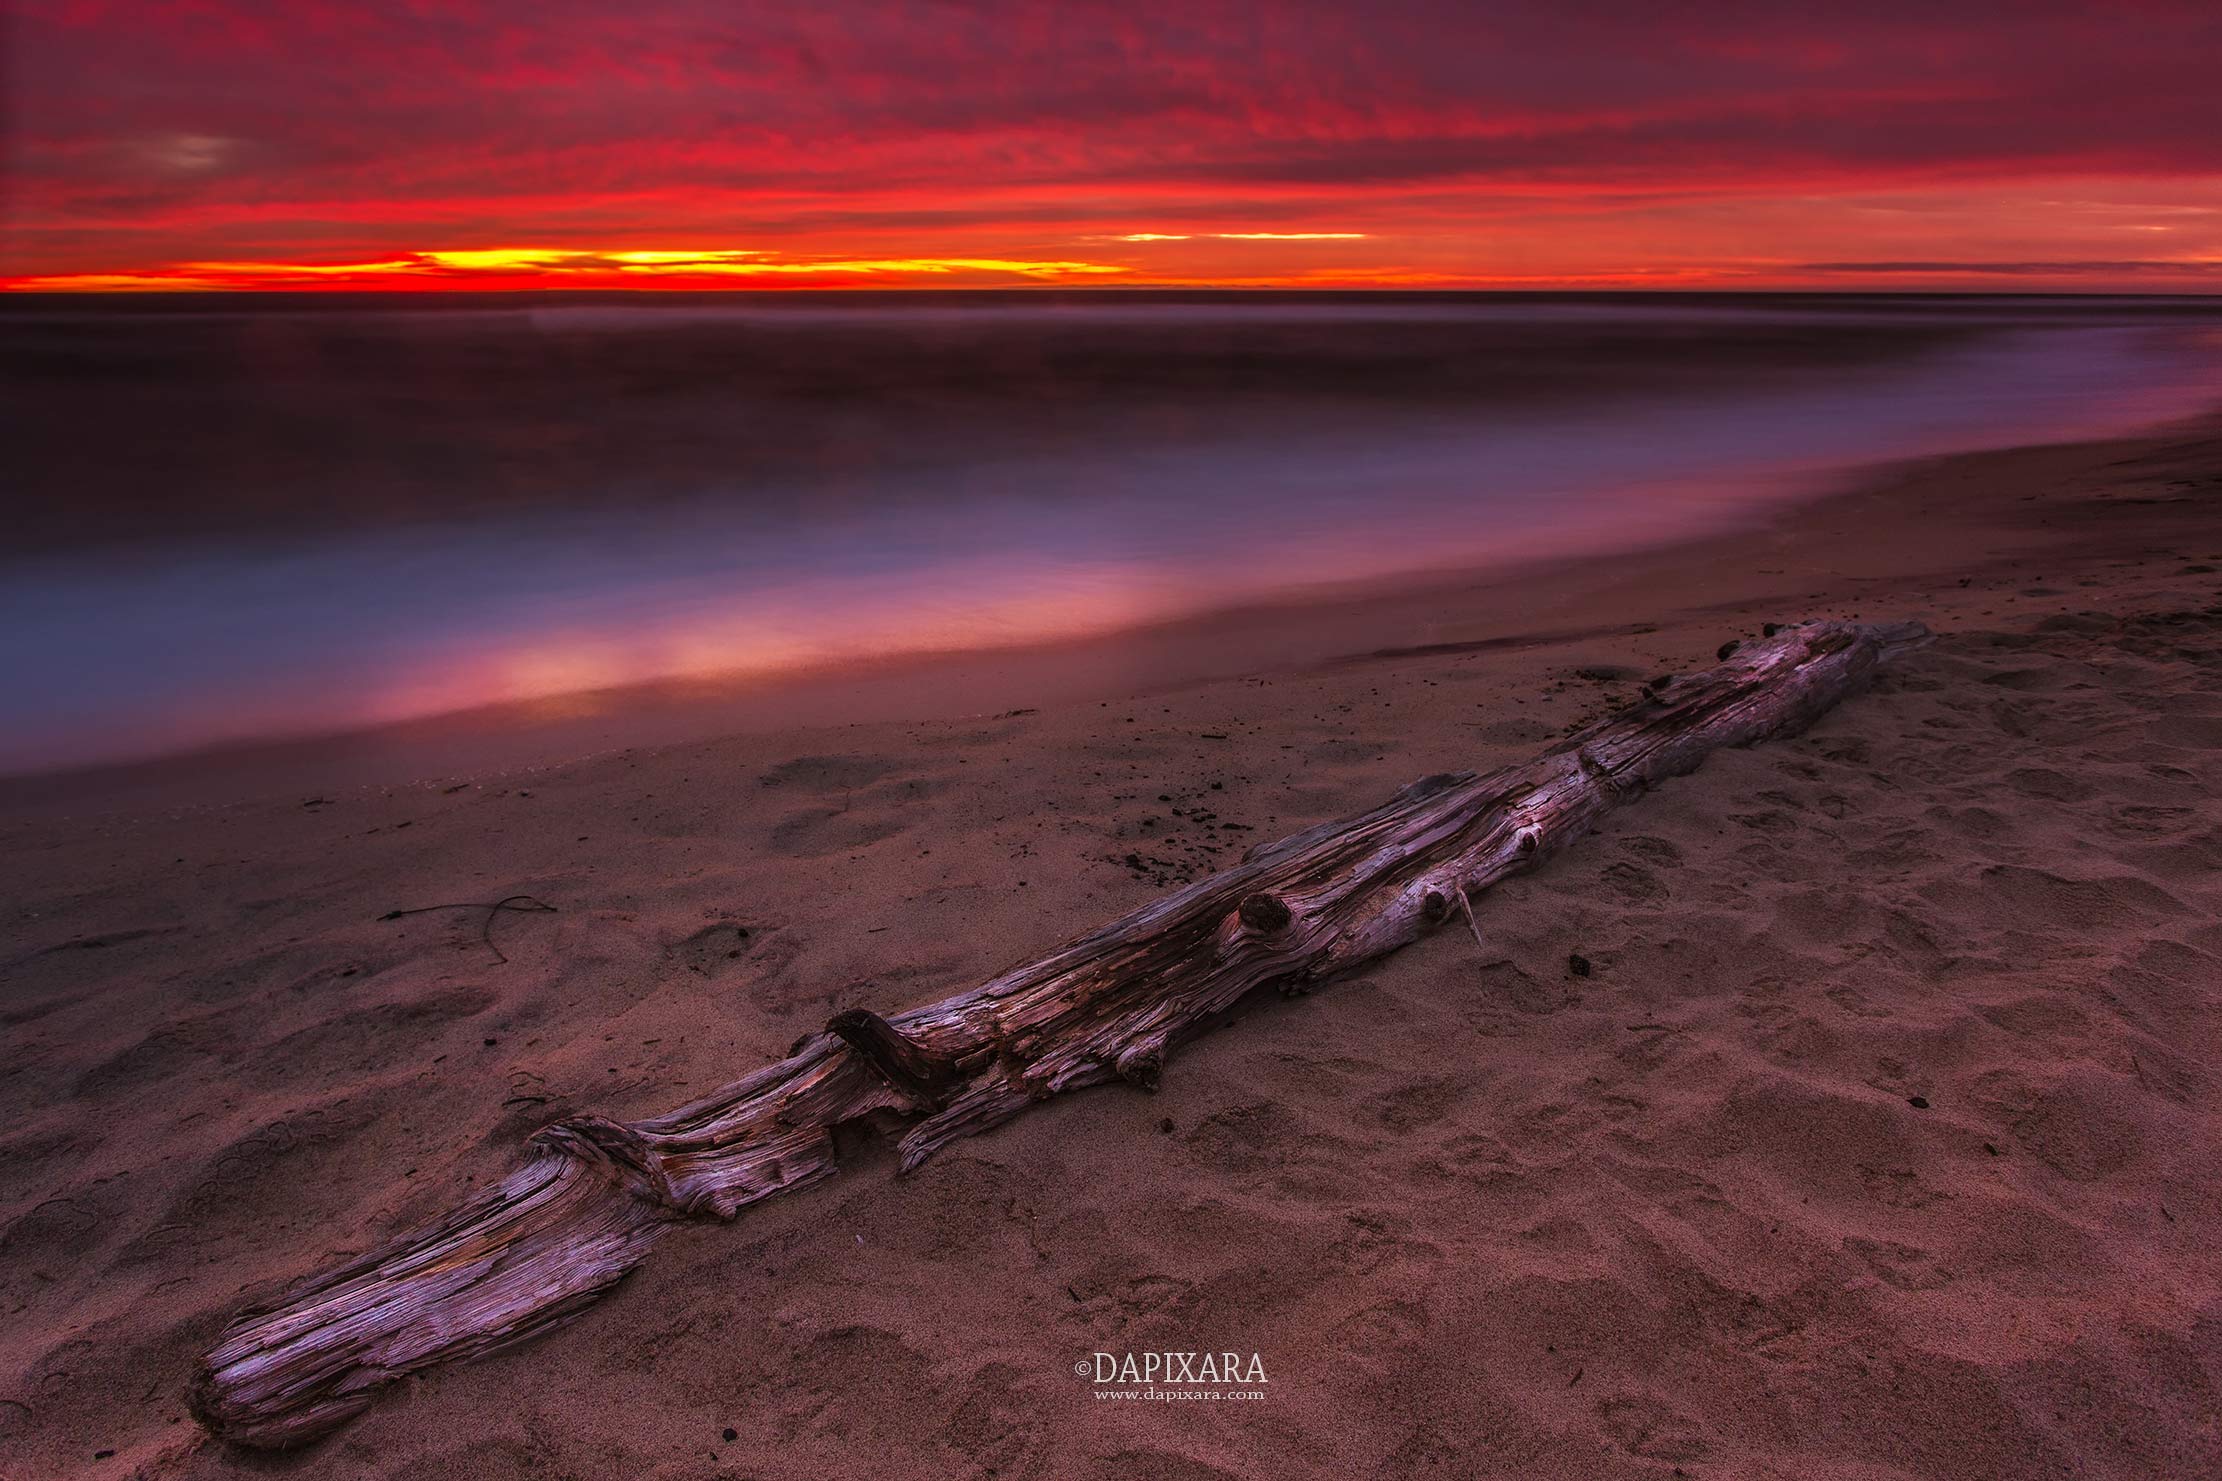 Wicked sunrise over Newcomb Hollow beach in Wellfleet, Cape Cod. Photographer Dapixara.